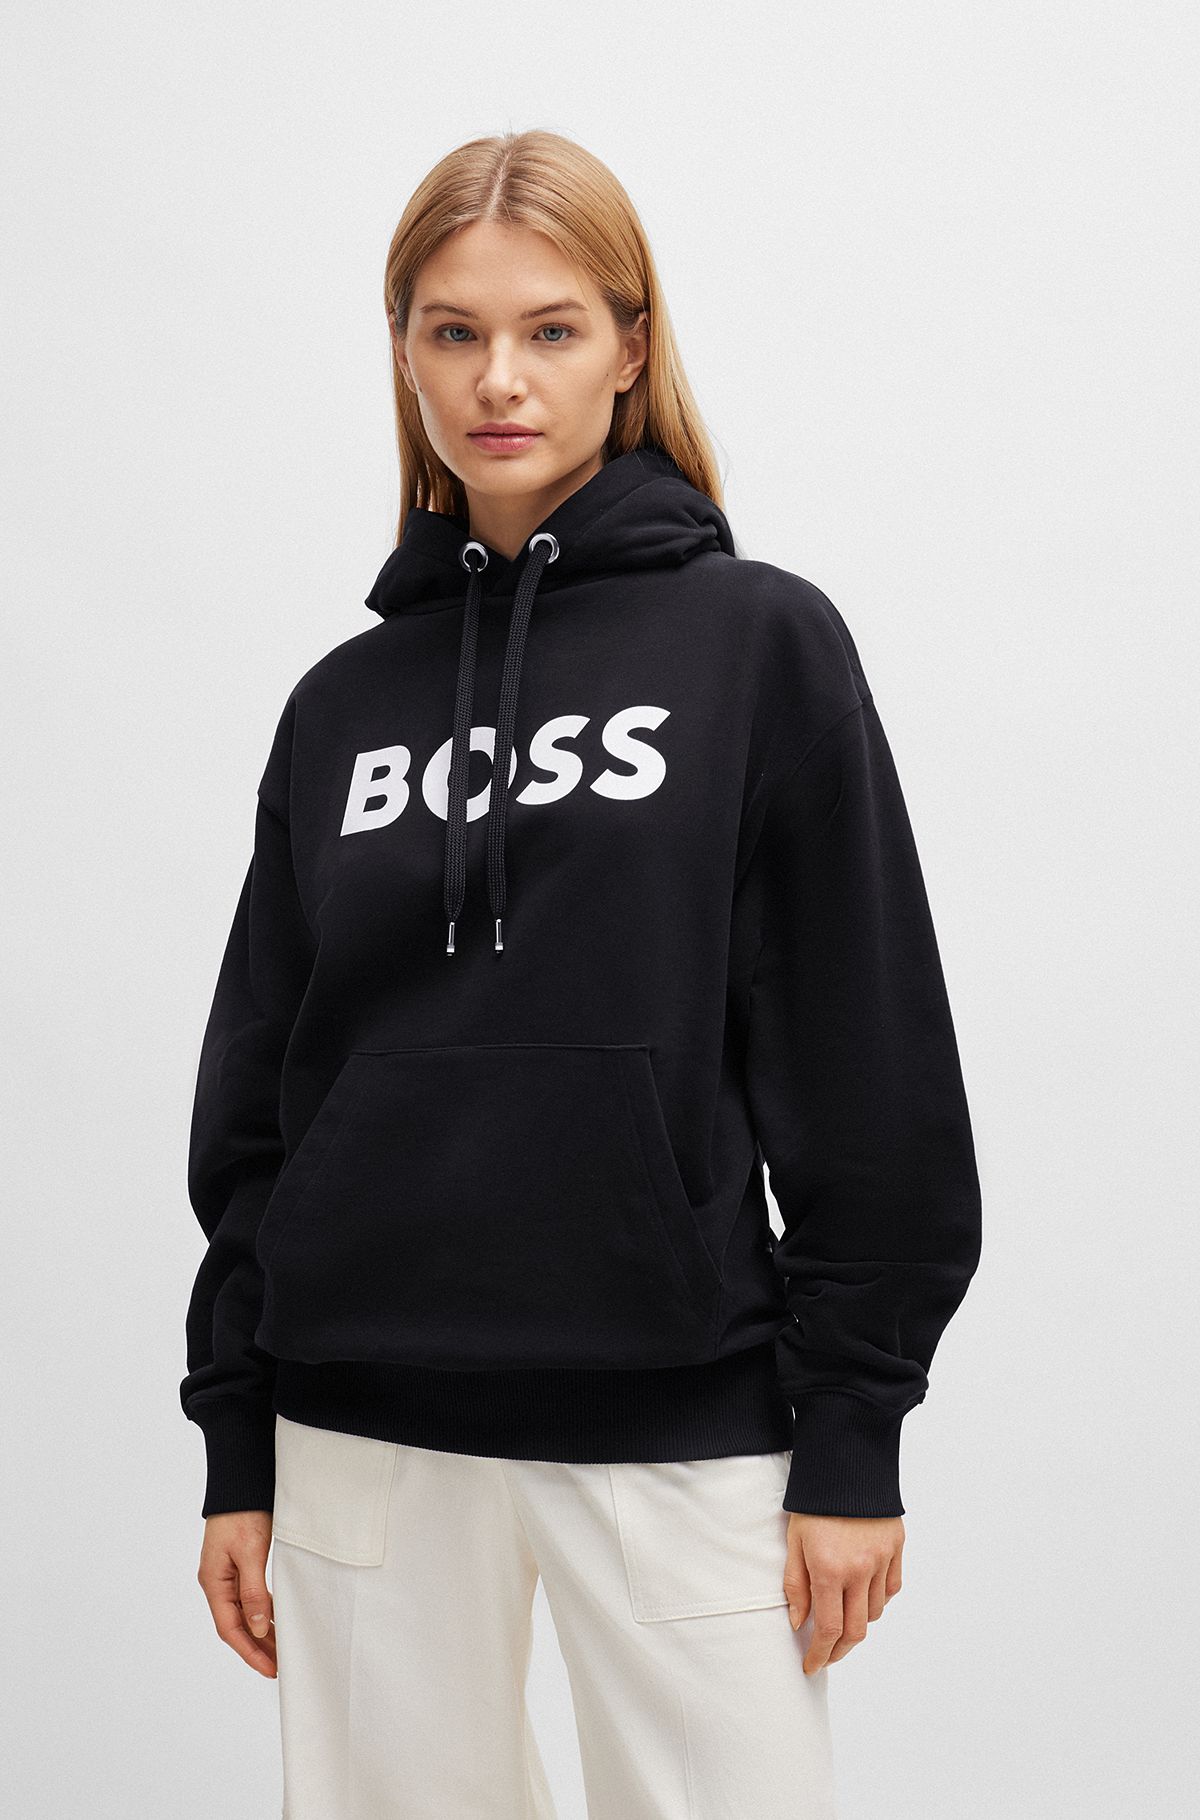 NWT Girls Luv Pink White 'Boss' Sweatshirt & Black 'Boss' Leggings